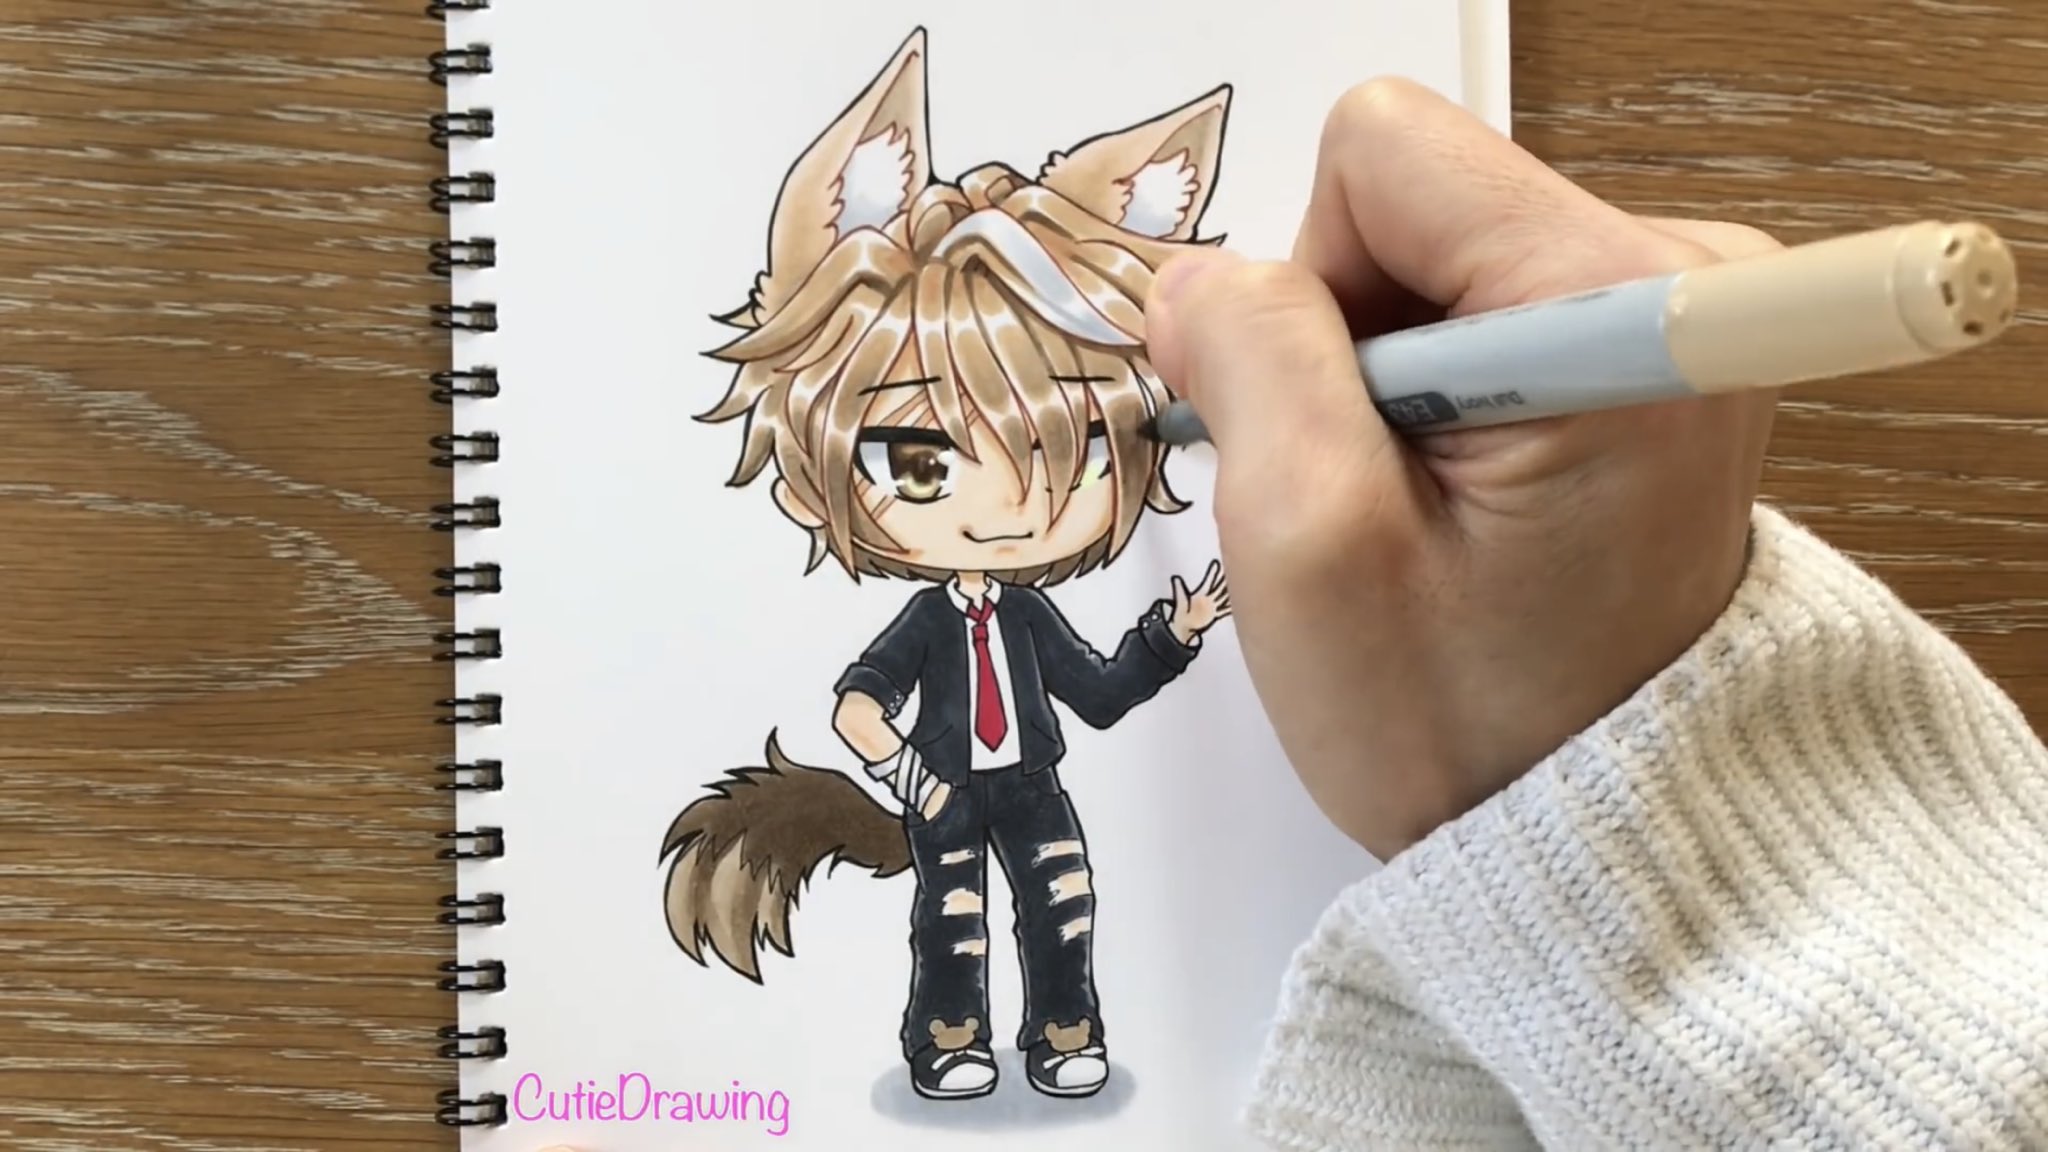 How to Draw Gacha Life Boy Character 3 